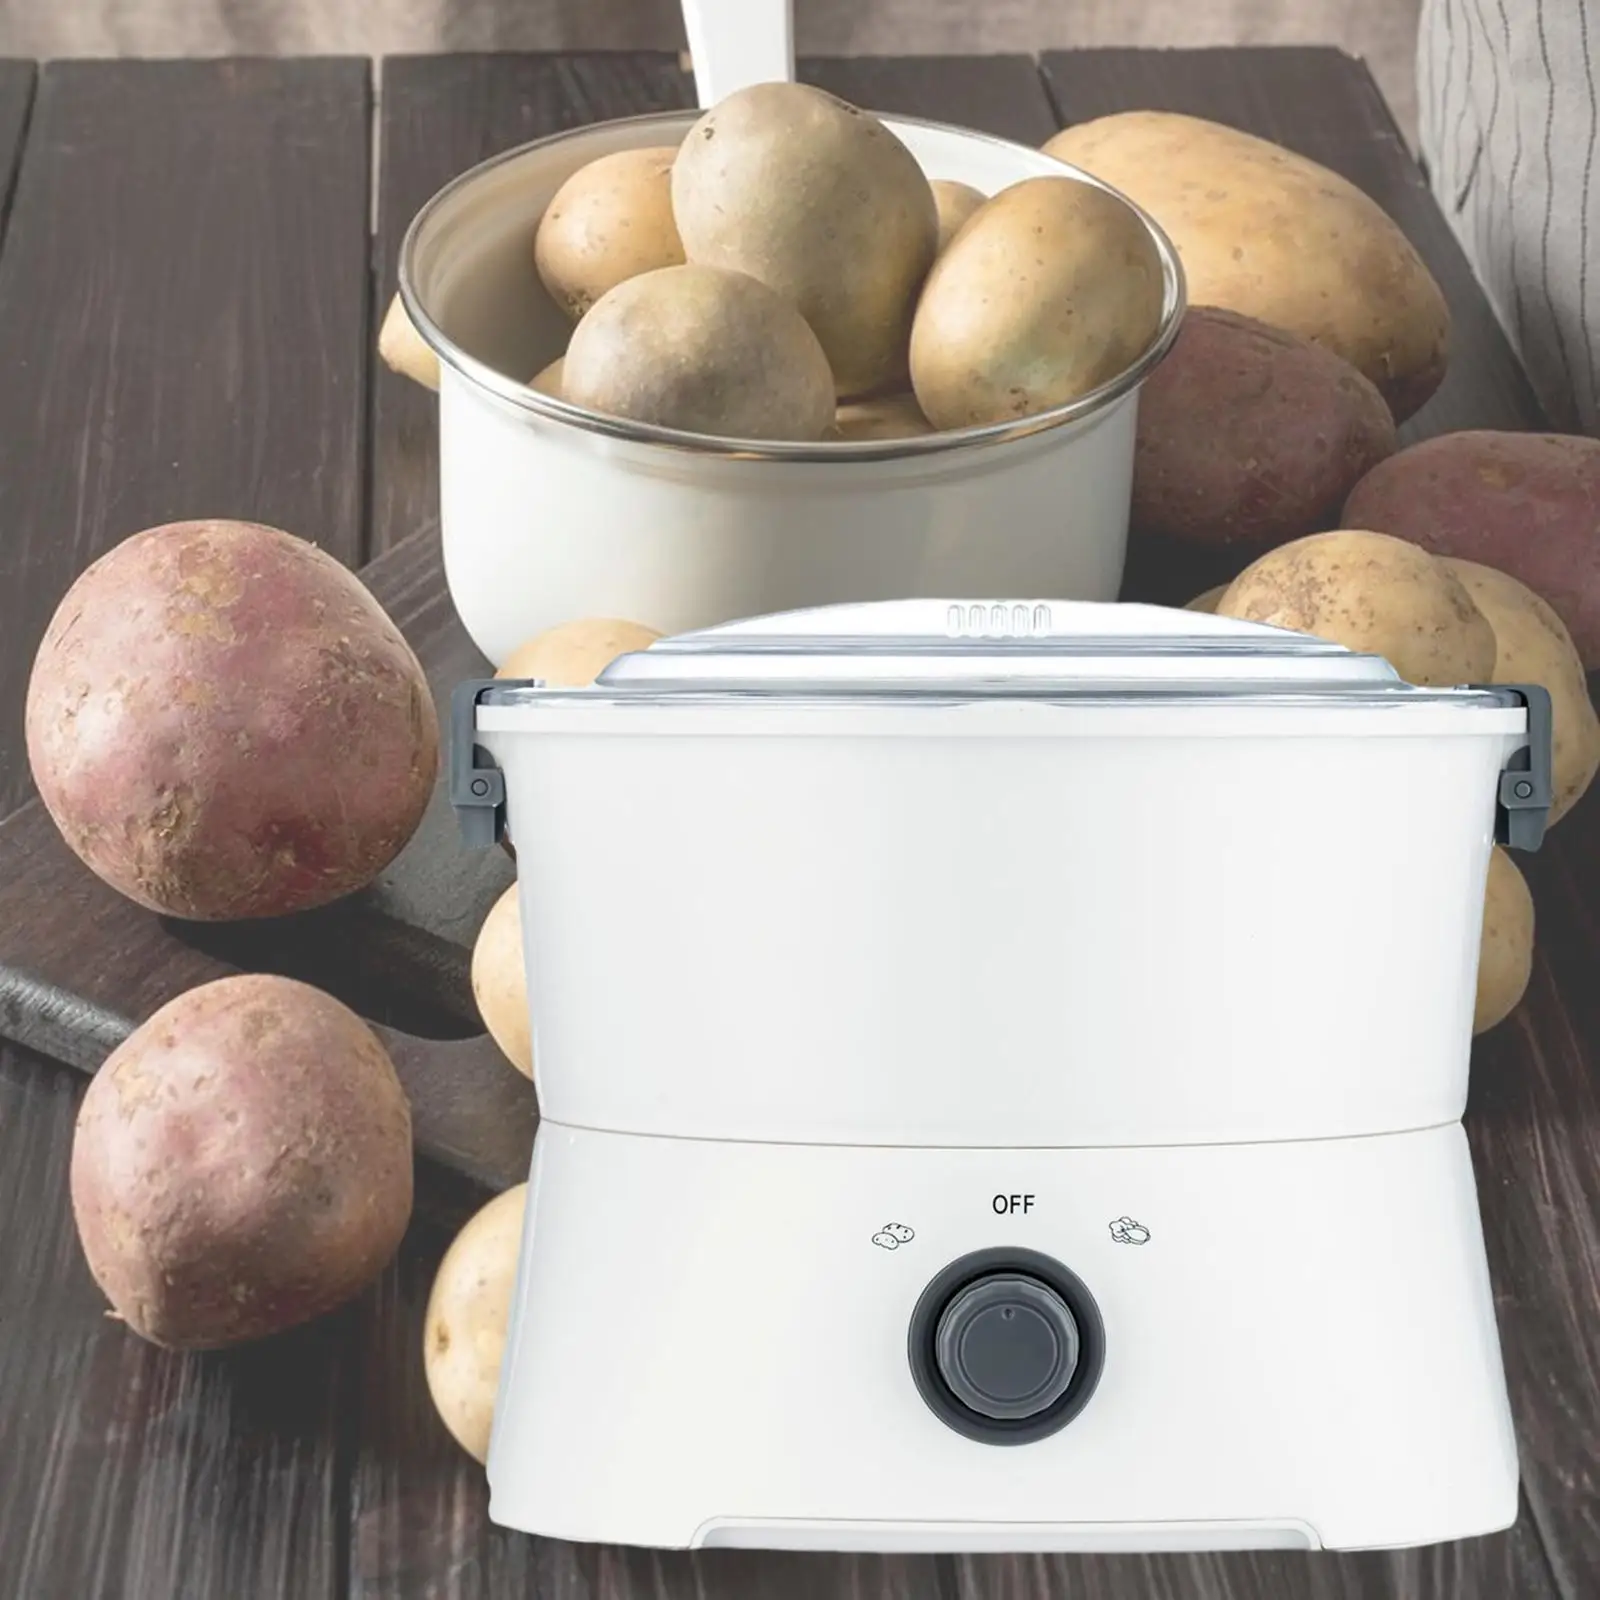 Potato Peeling Machine Multipurpose Practical Portable Automatic Potato Peelers for Party Camping Household Kitchen Hotel